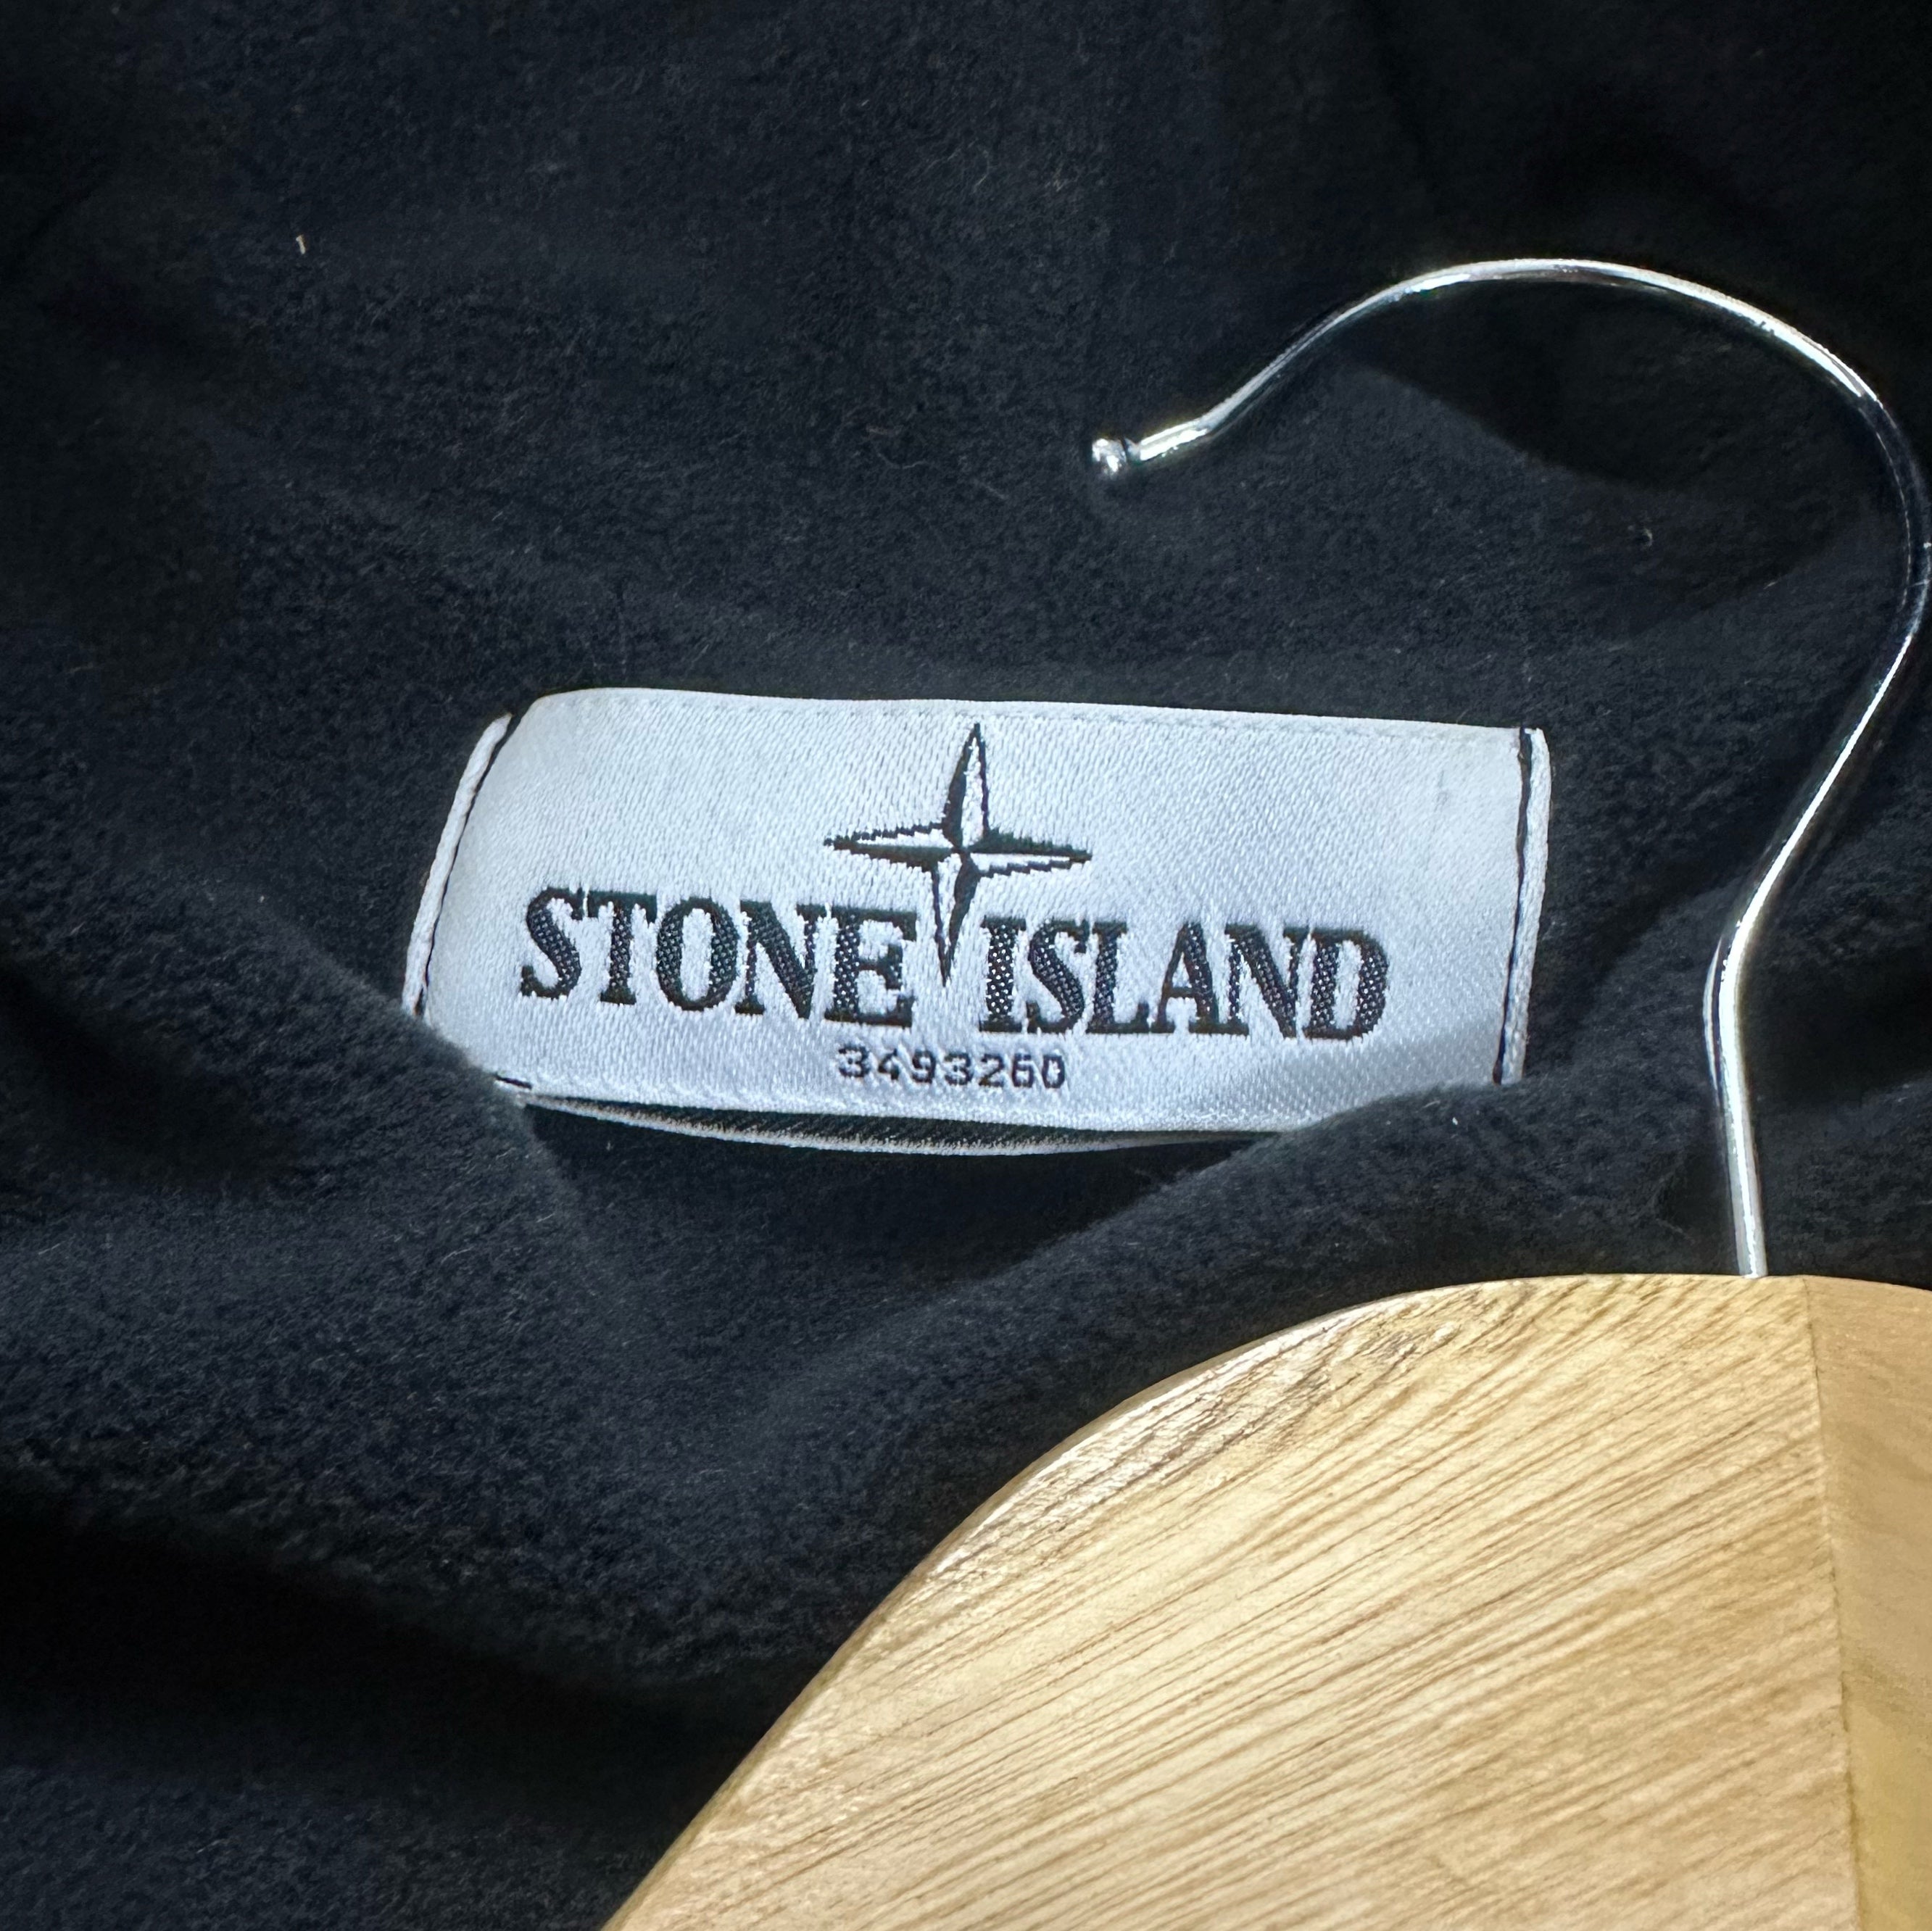 Stone Island Reflective 30th Anniversary Camo Jacket